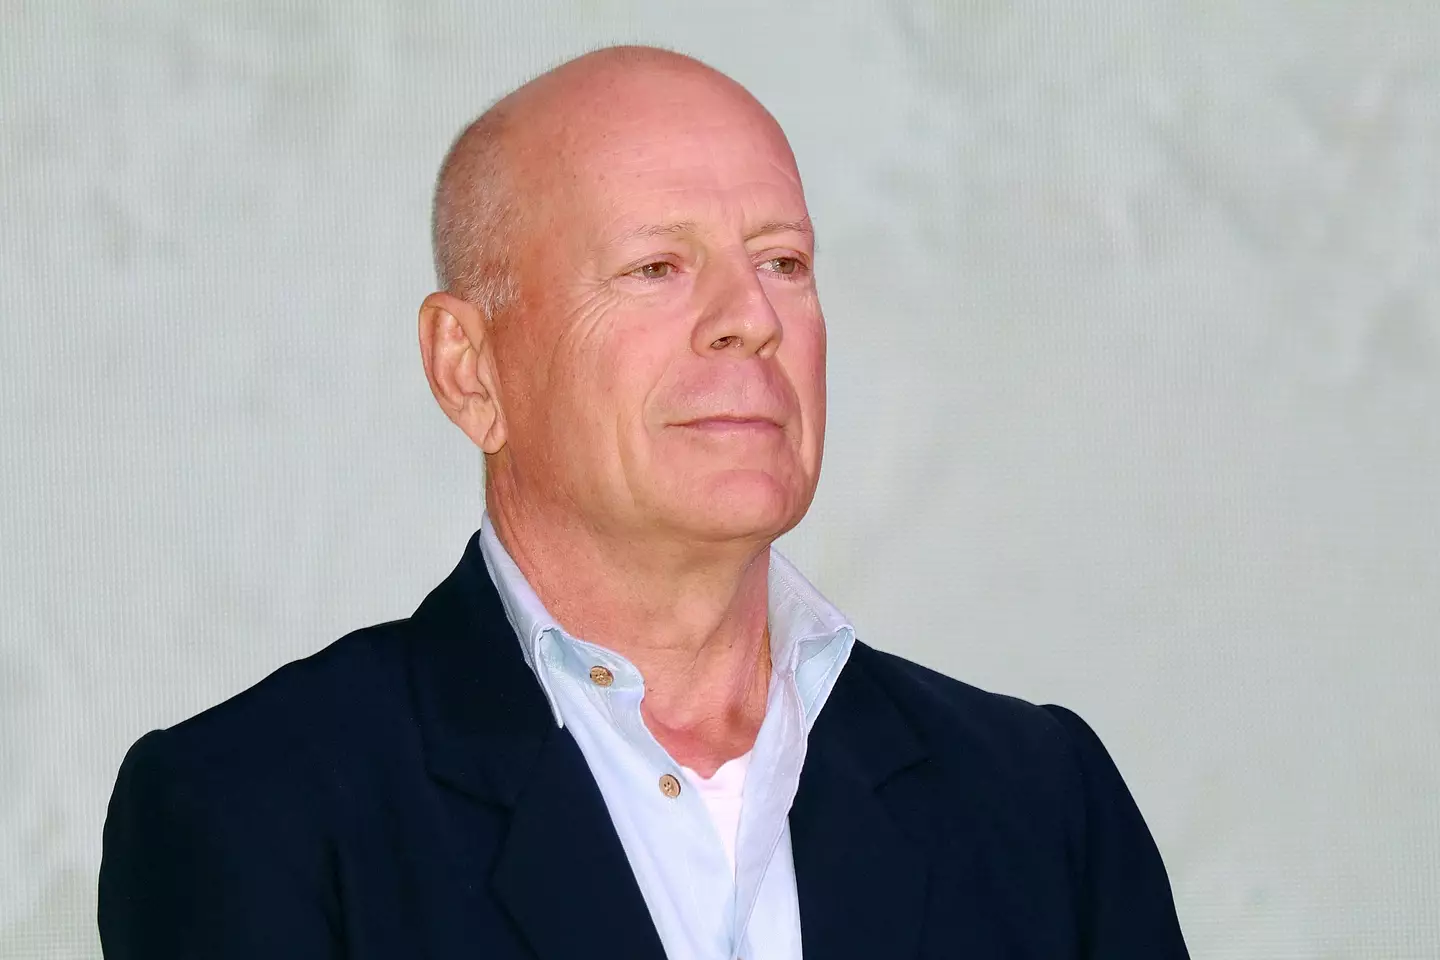 Bruce Willis is battling dementia.